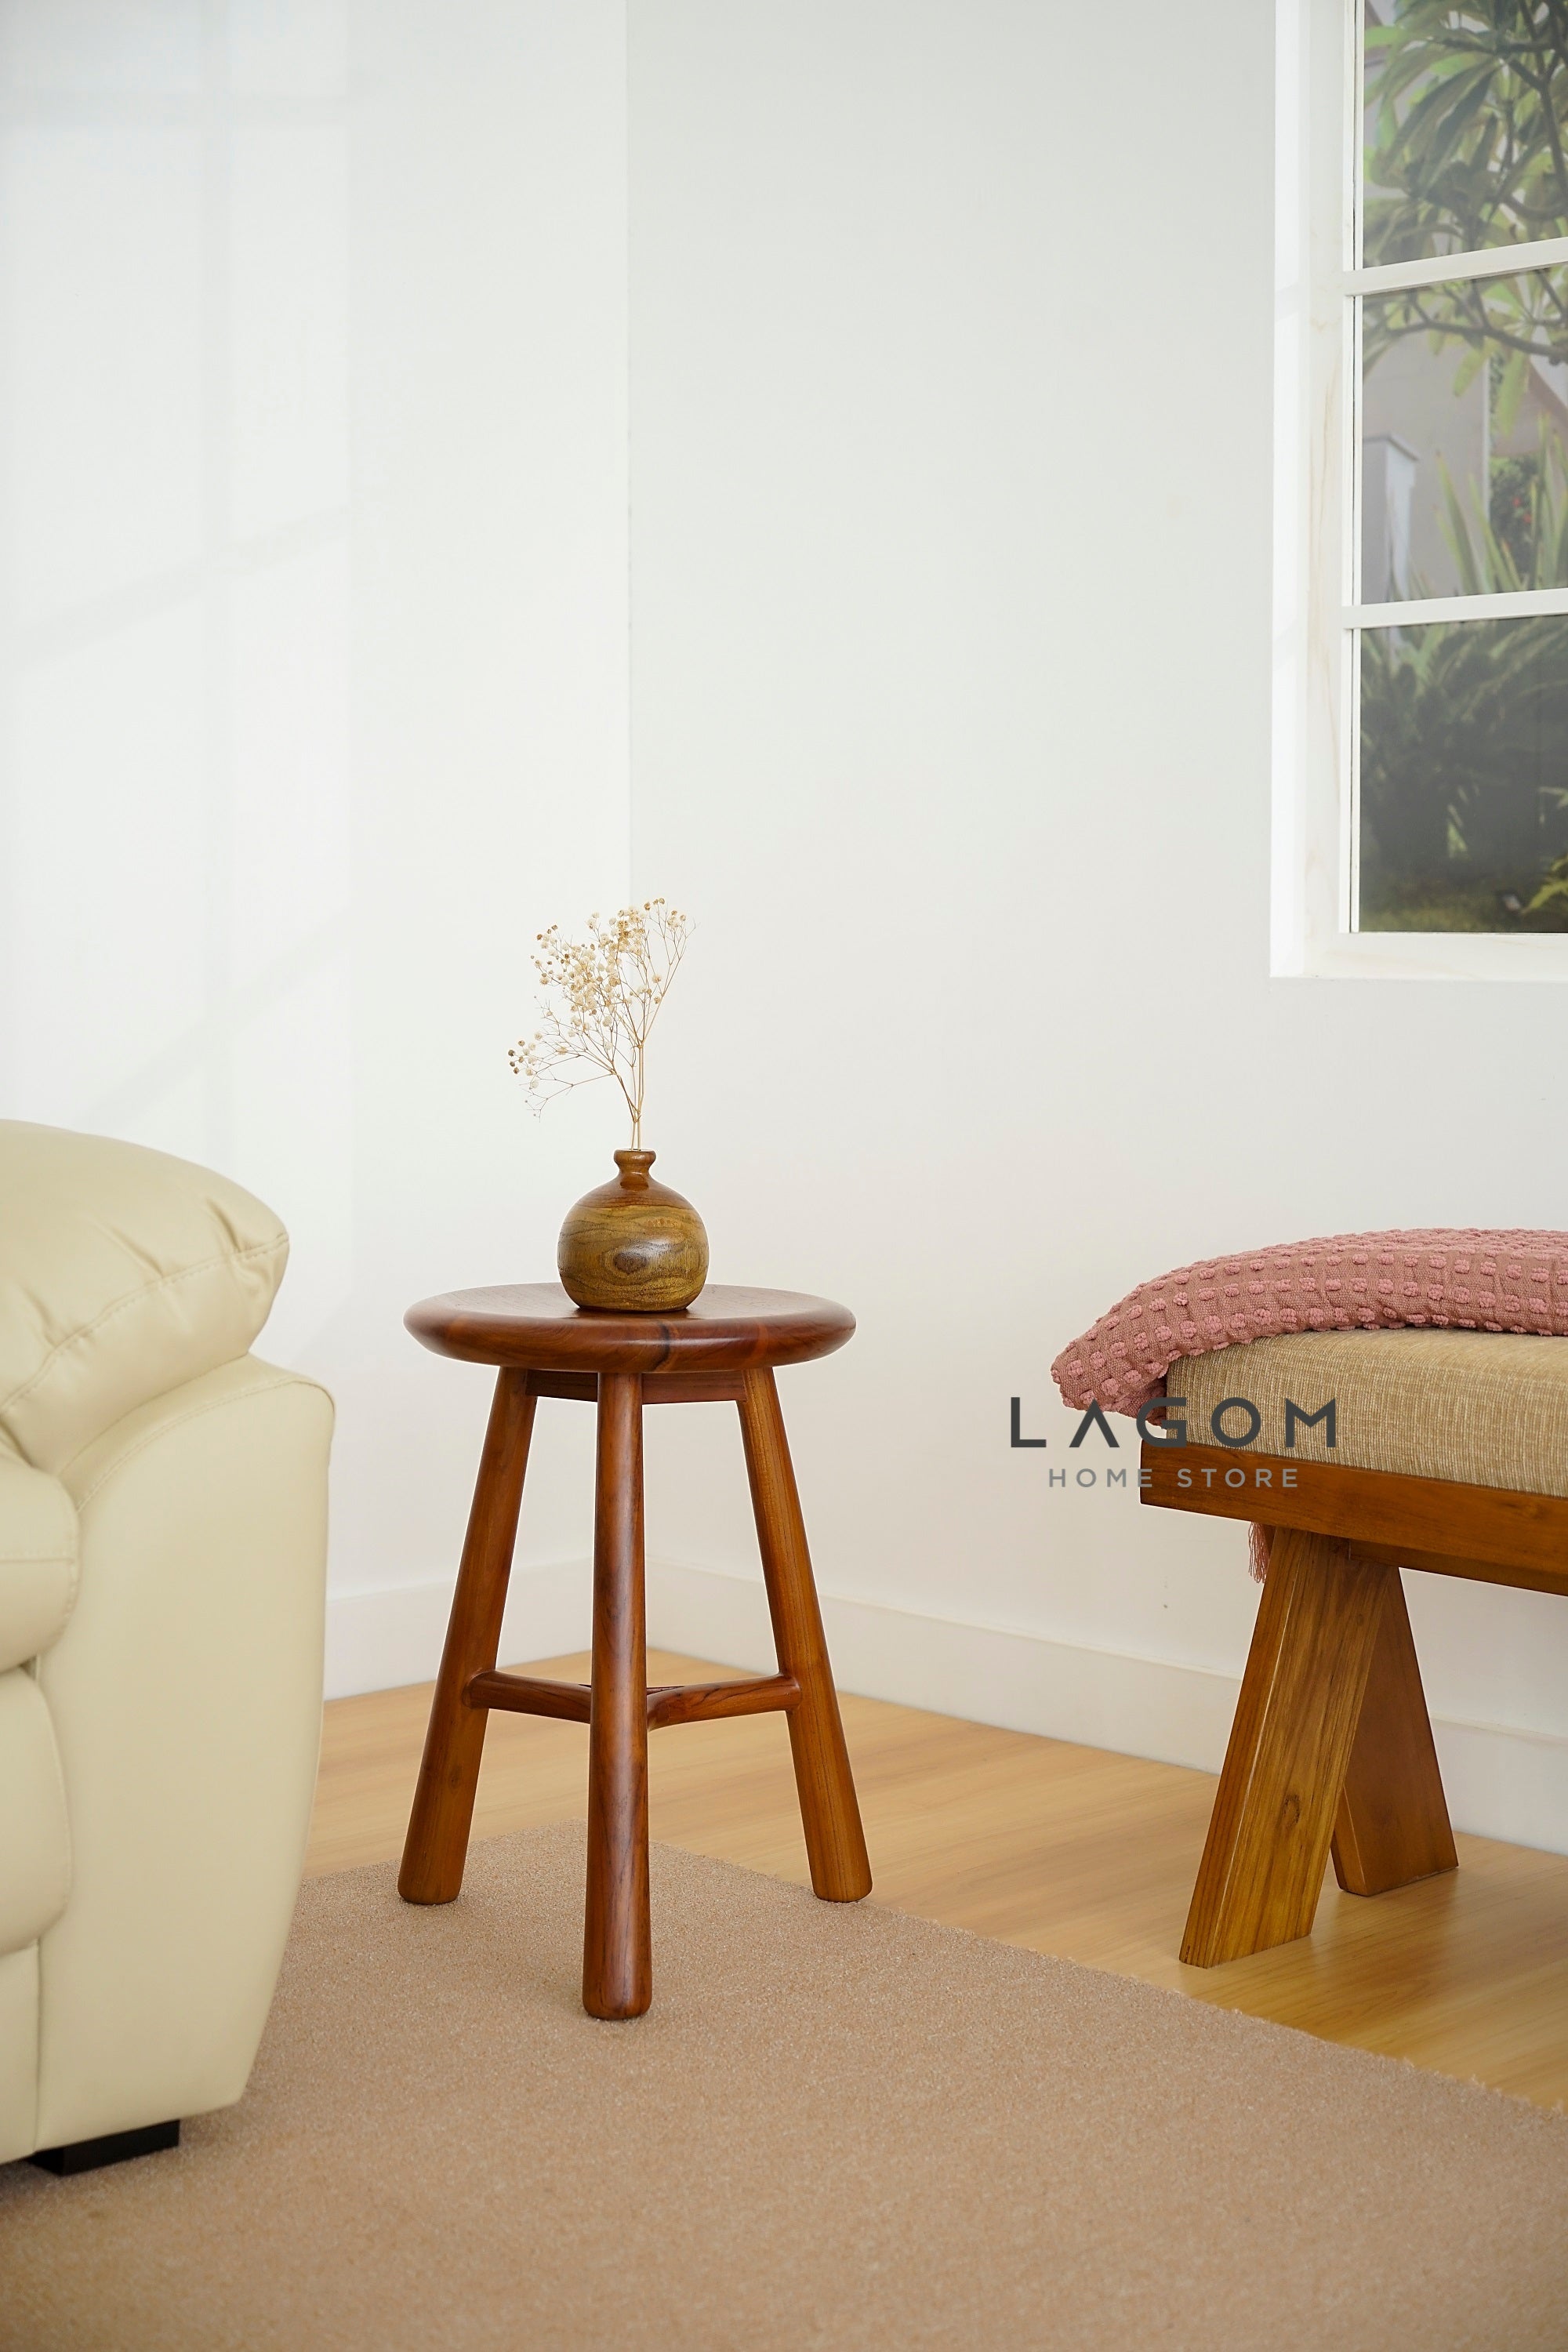 Bangku dari Kayu Jati dengan Removable Cushion - Panjang 180 cm Bench Seat Lagom Home Store Jati Furnitur Teak Furniture Jakarta